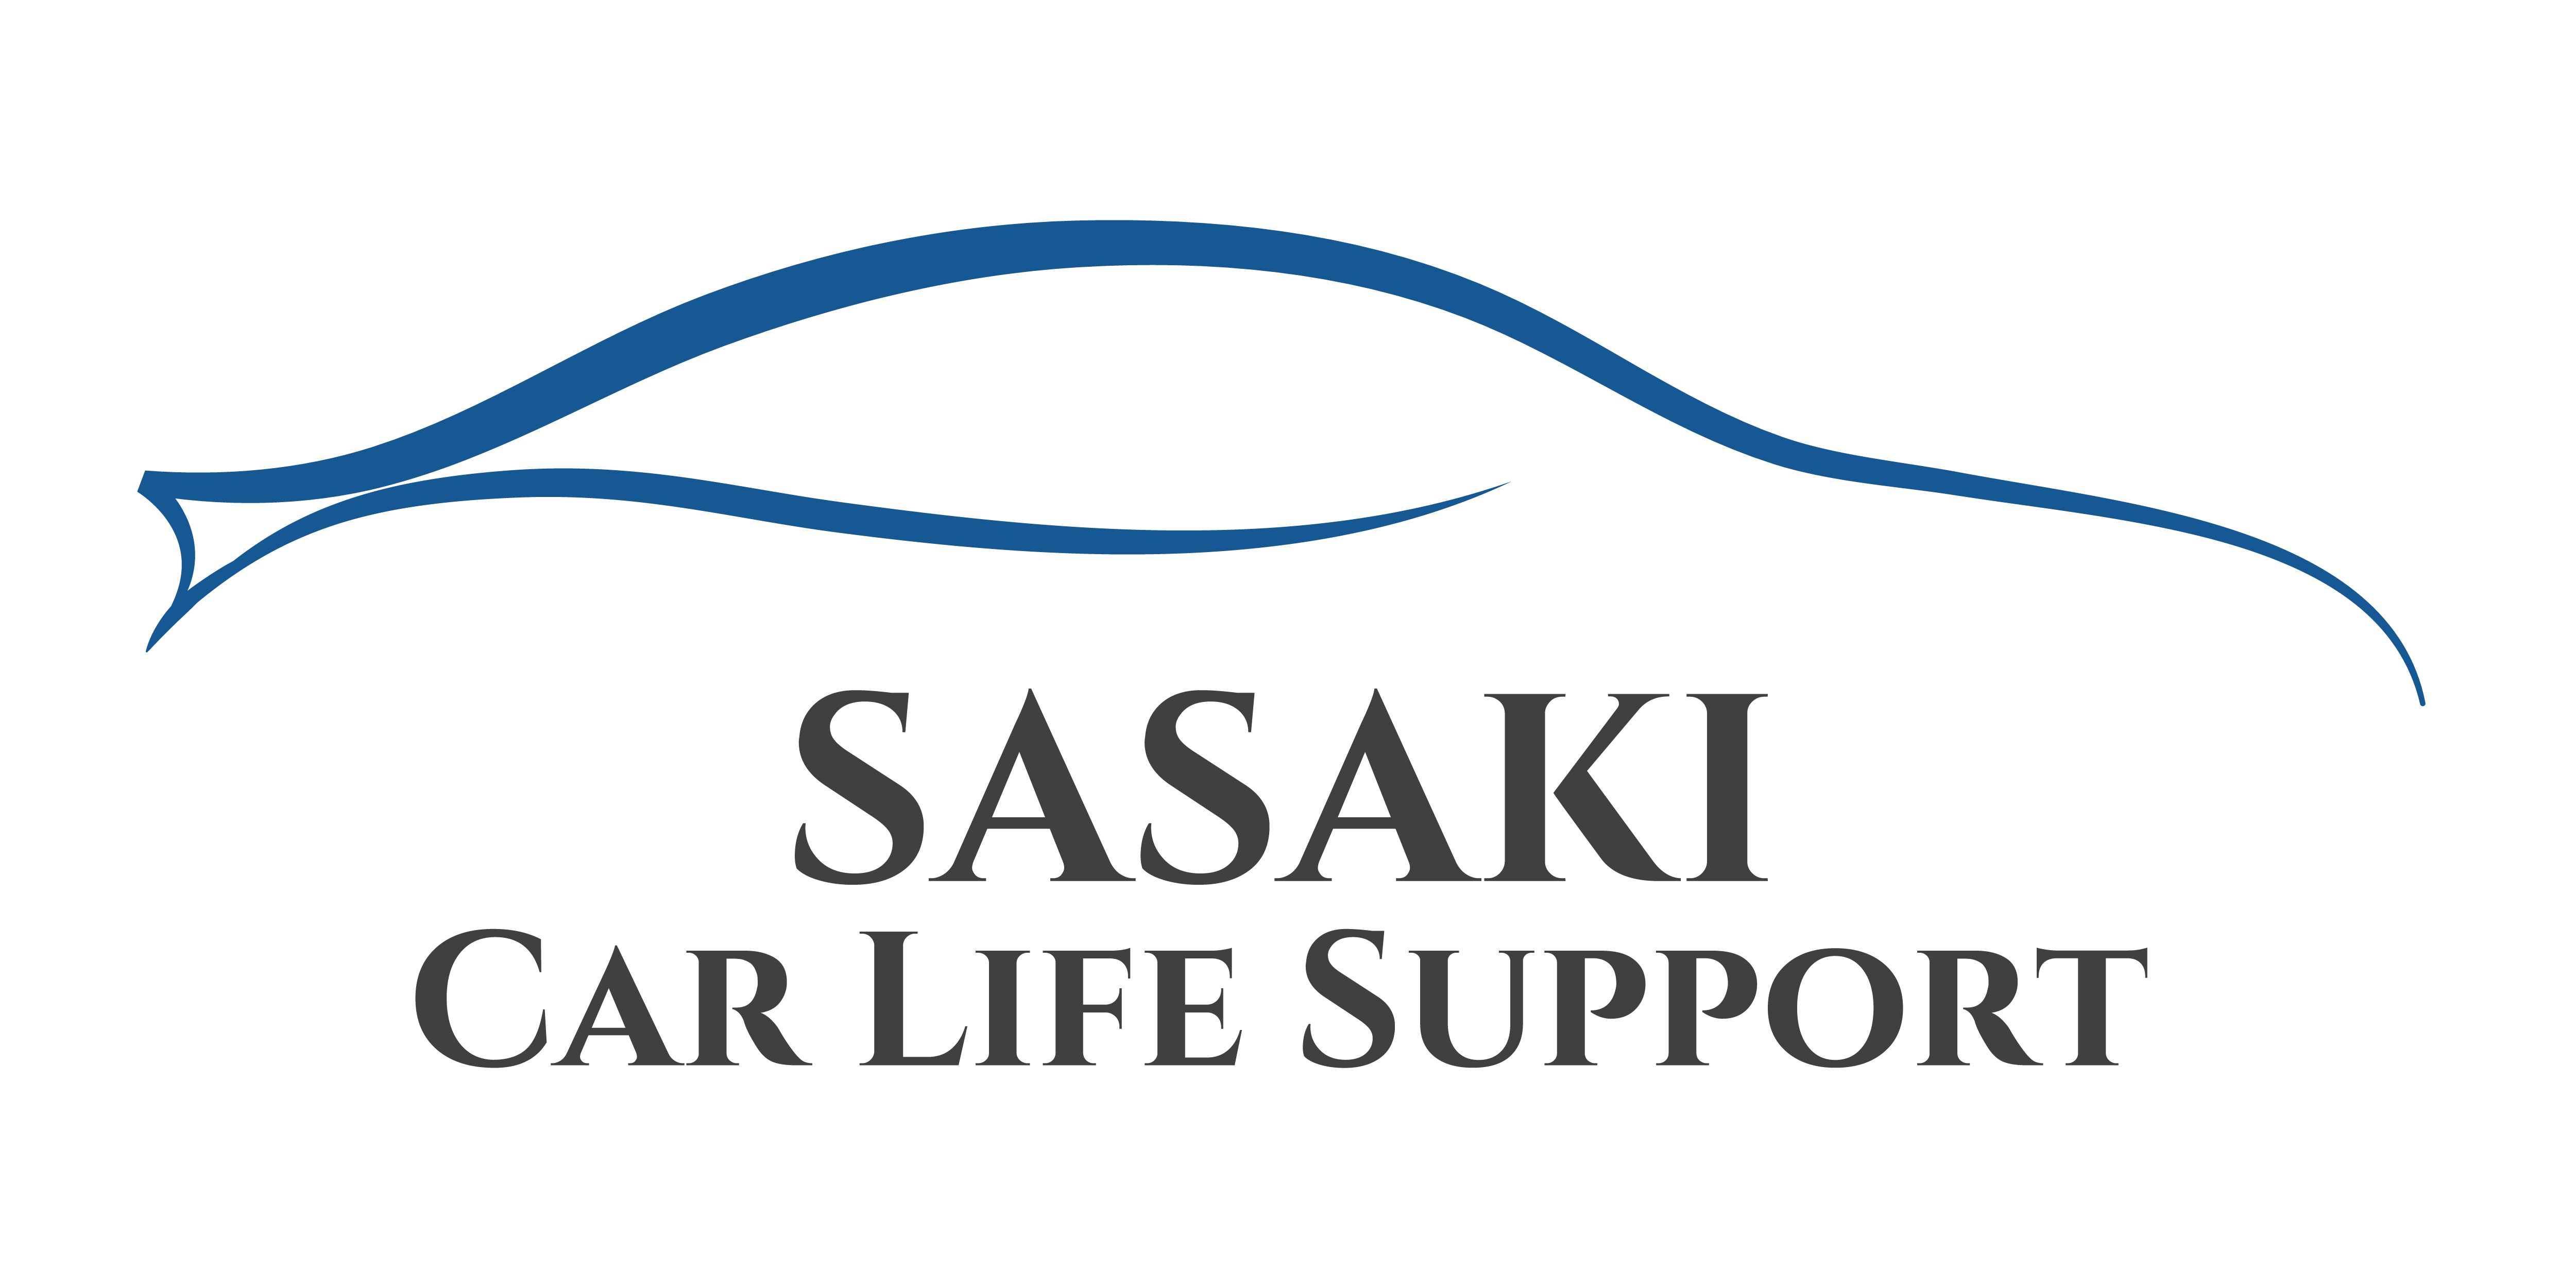 SASAKI Car Life Support(縦)1200×600px